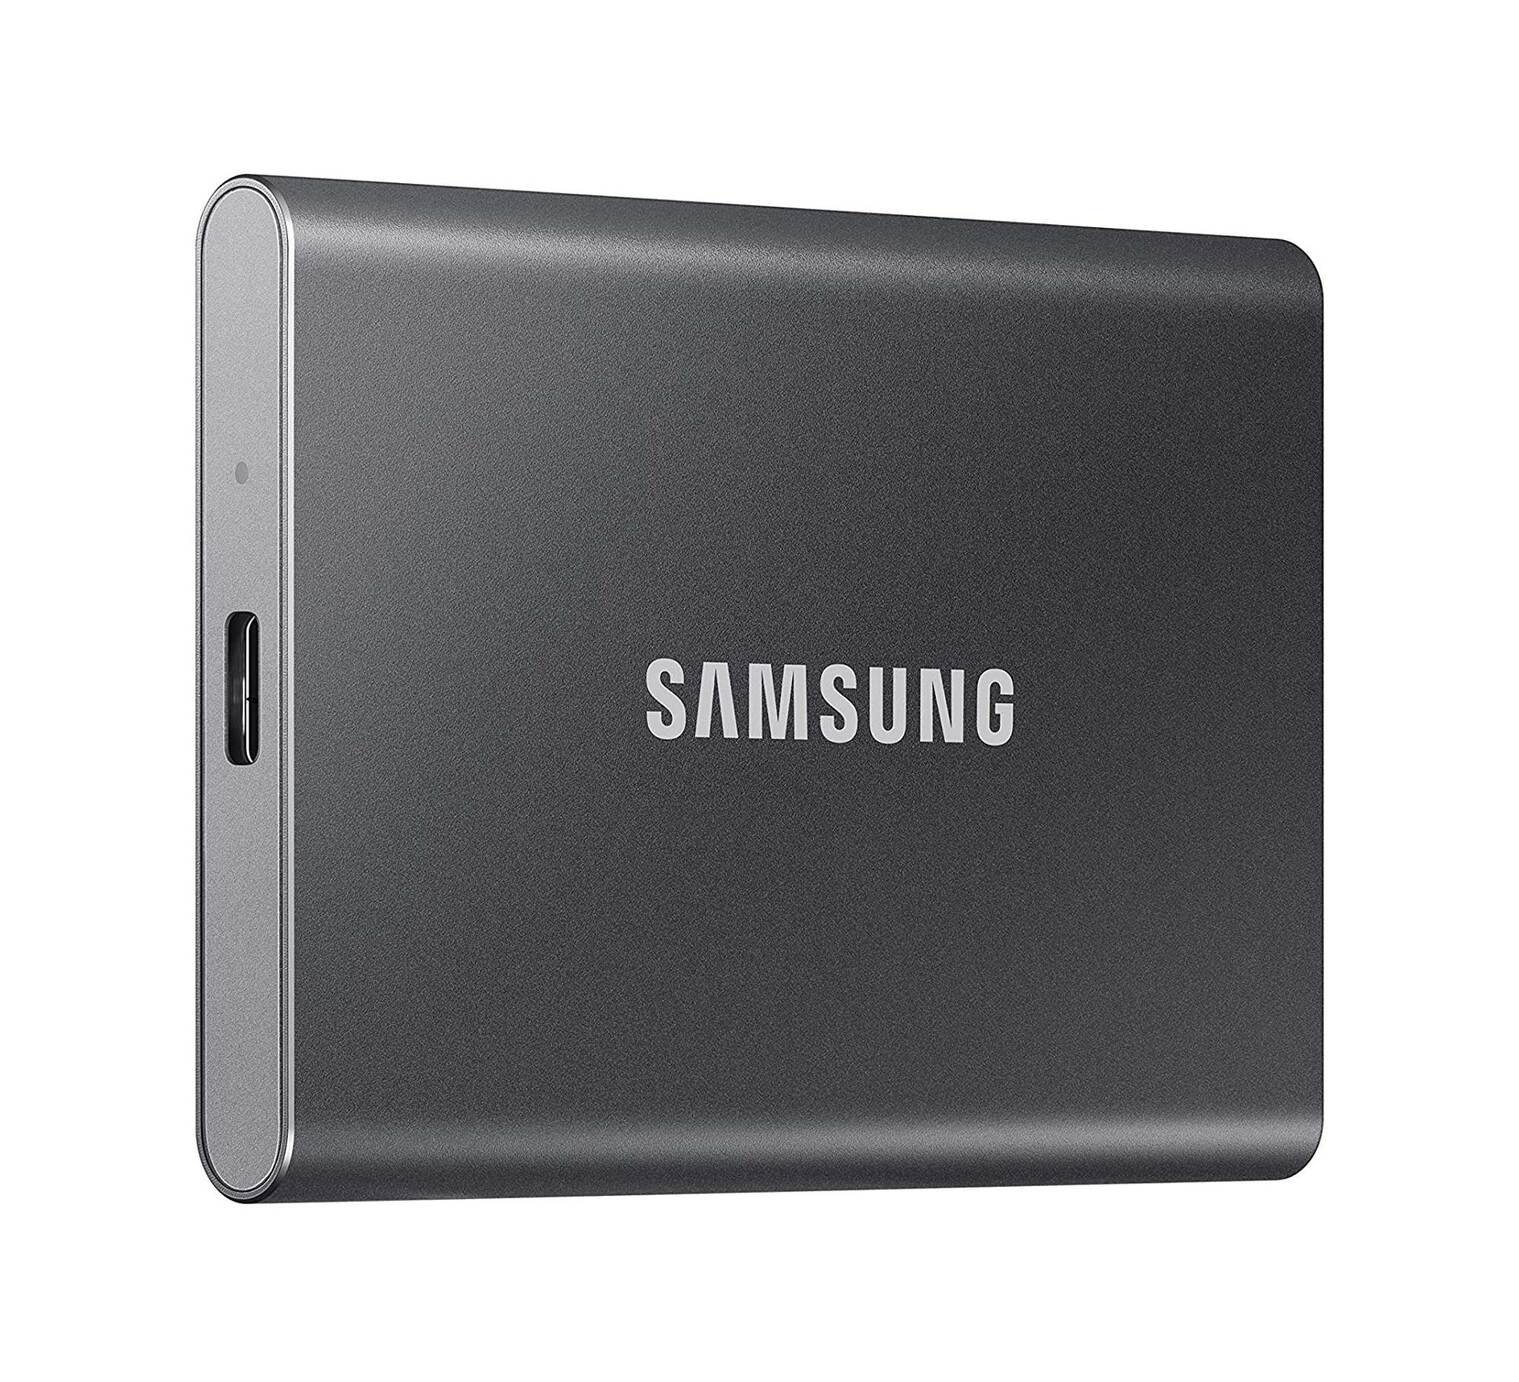 Samsung USB 3.2 Gen 2 1TB Portable SSD Hard Drive Review